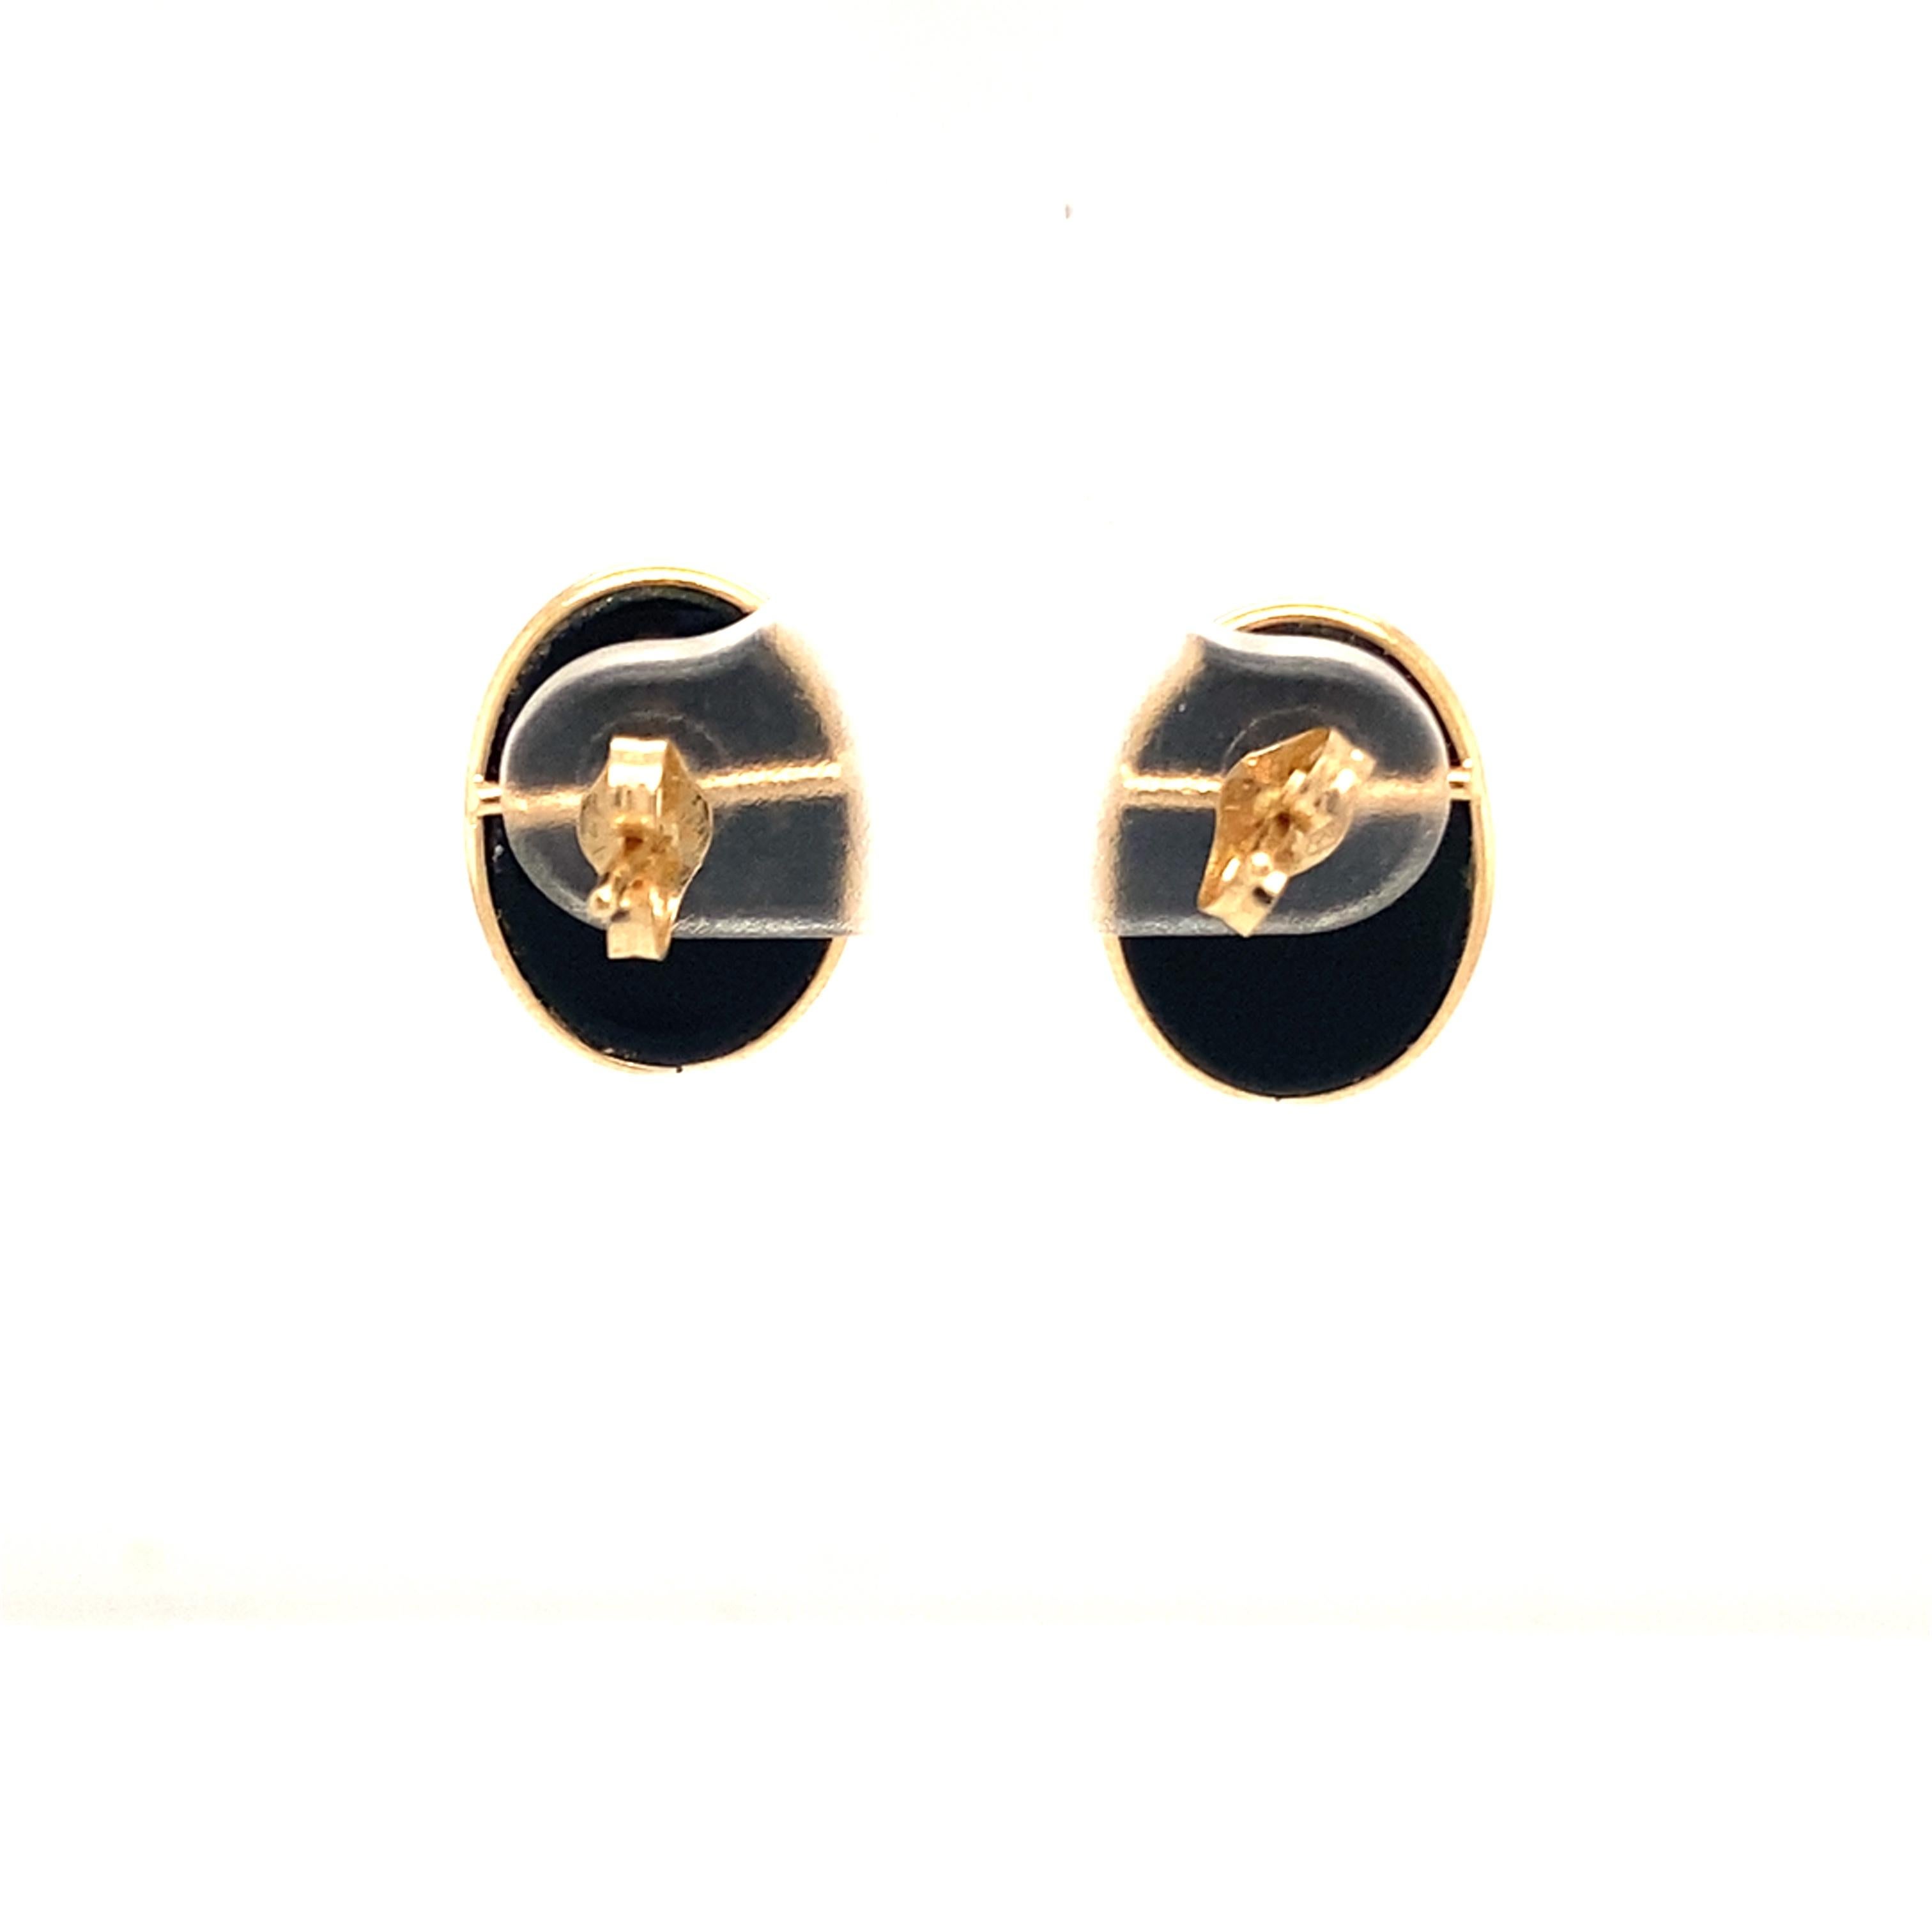 Cabochon 1950s Onyx Stud Earrings in 14 Karat Yellow Gold